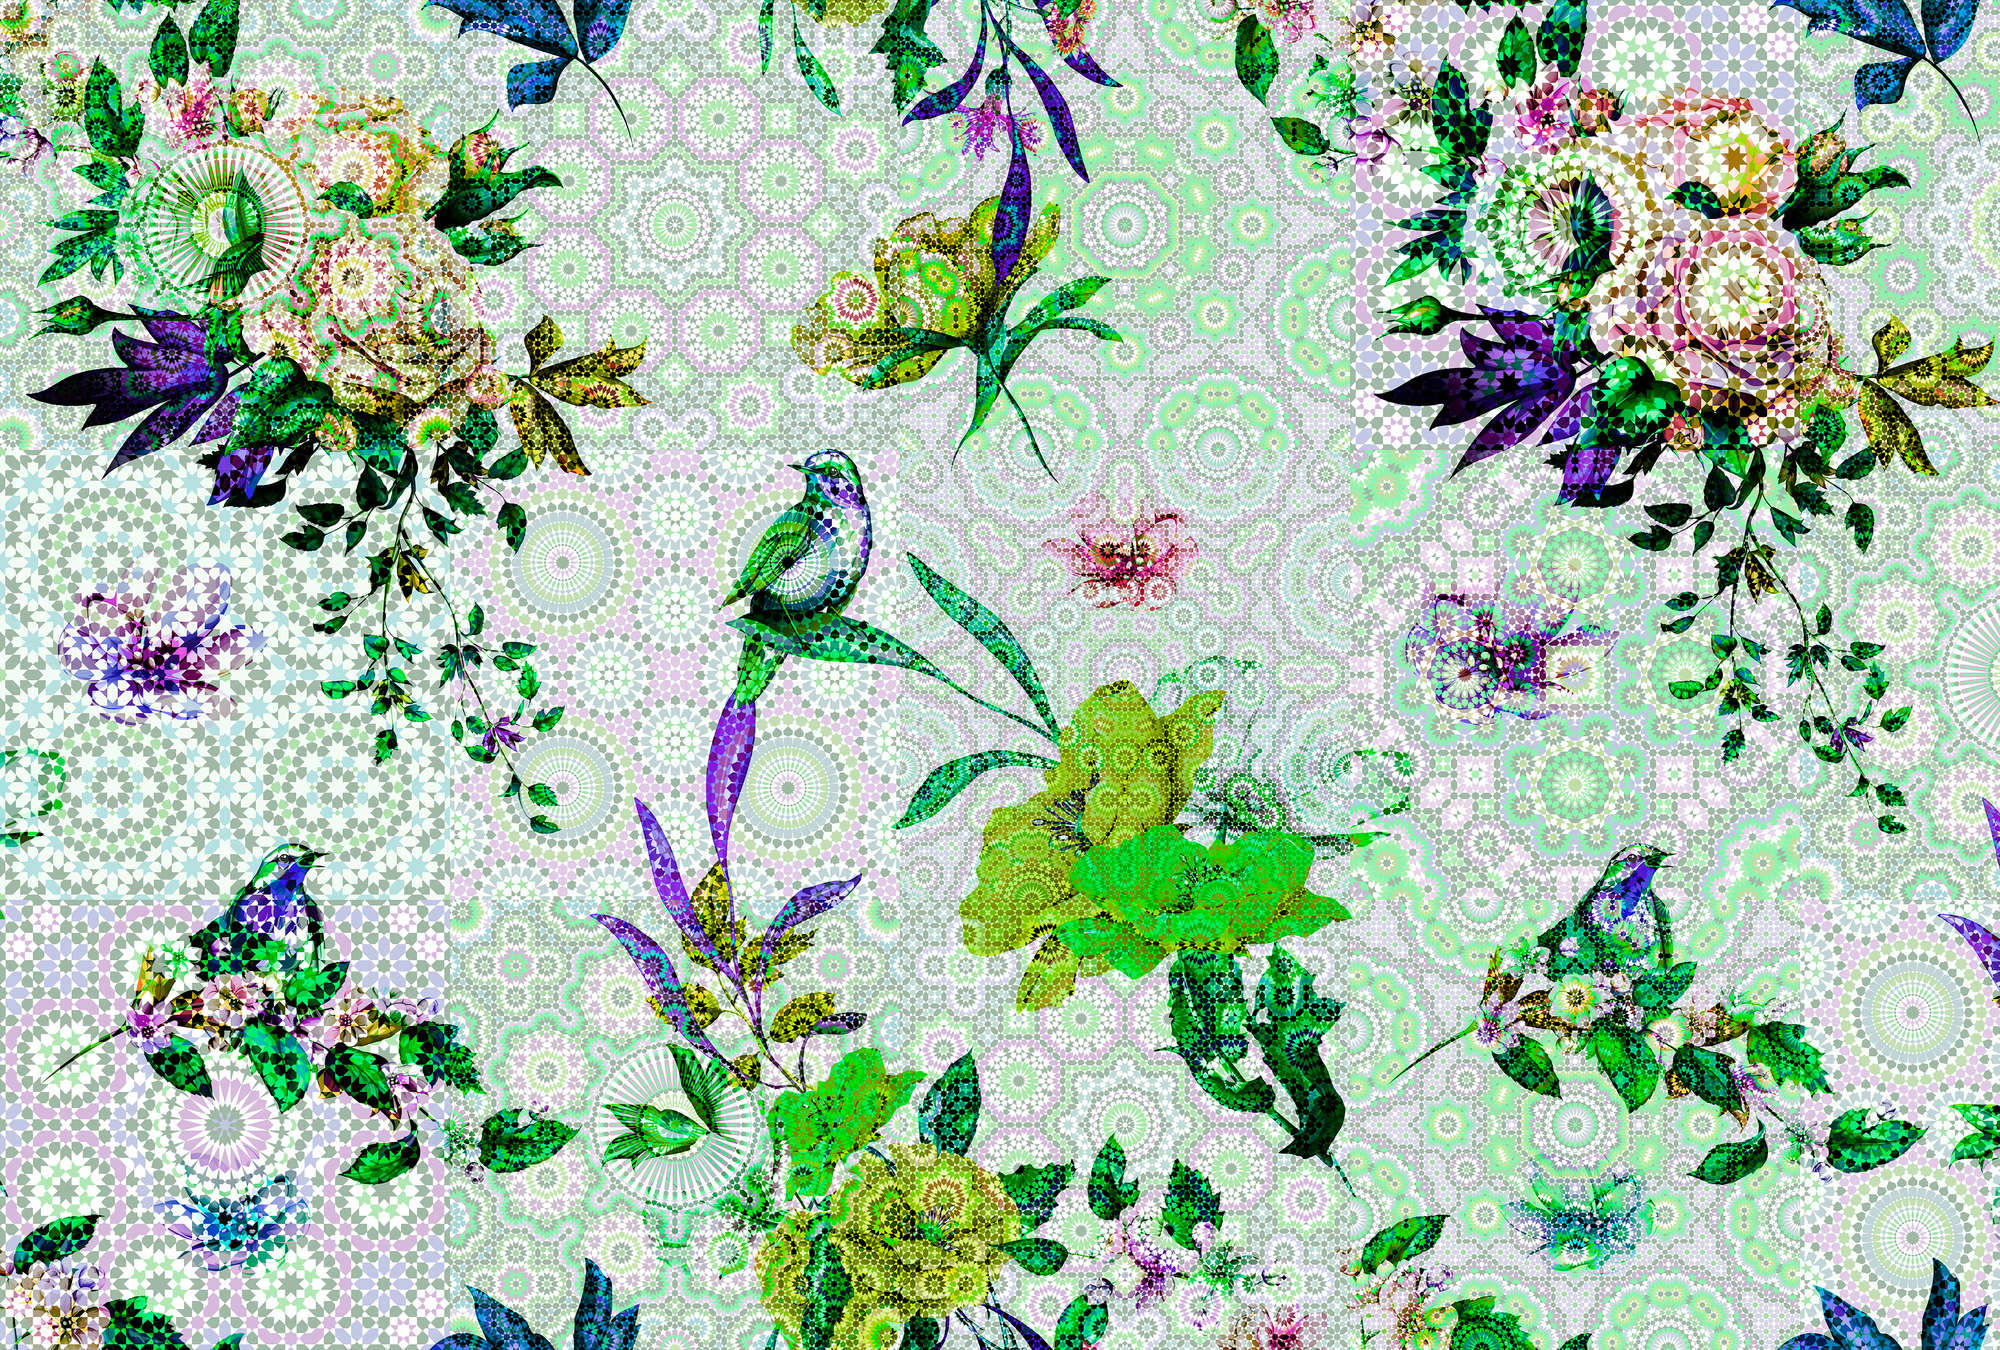             Blumen Fototapete mit modernem Mosaik Design
        